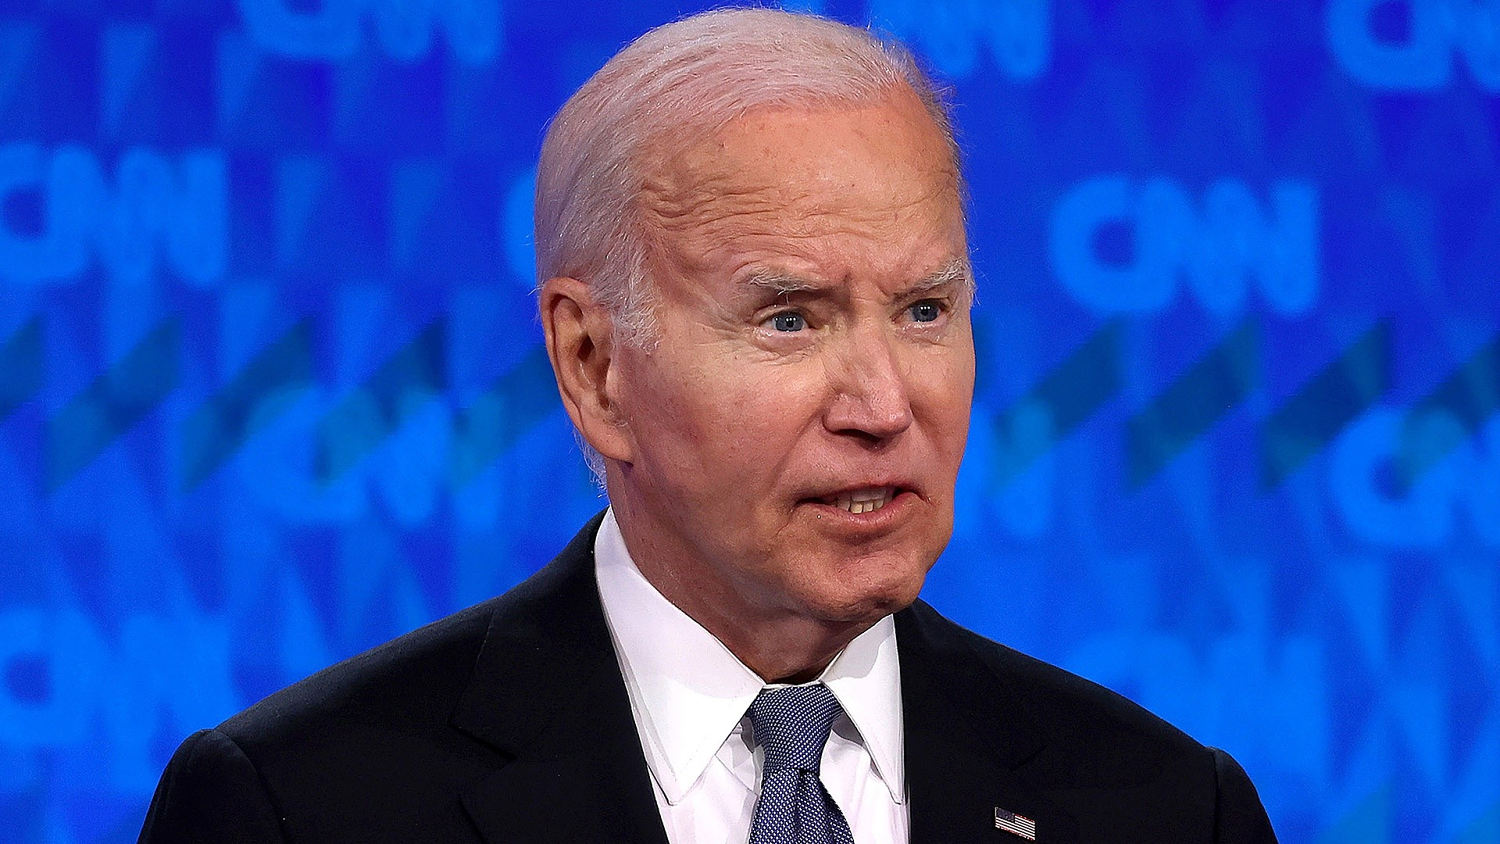 Biden's debate performance sparks concerns among Democrats